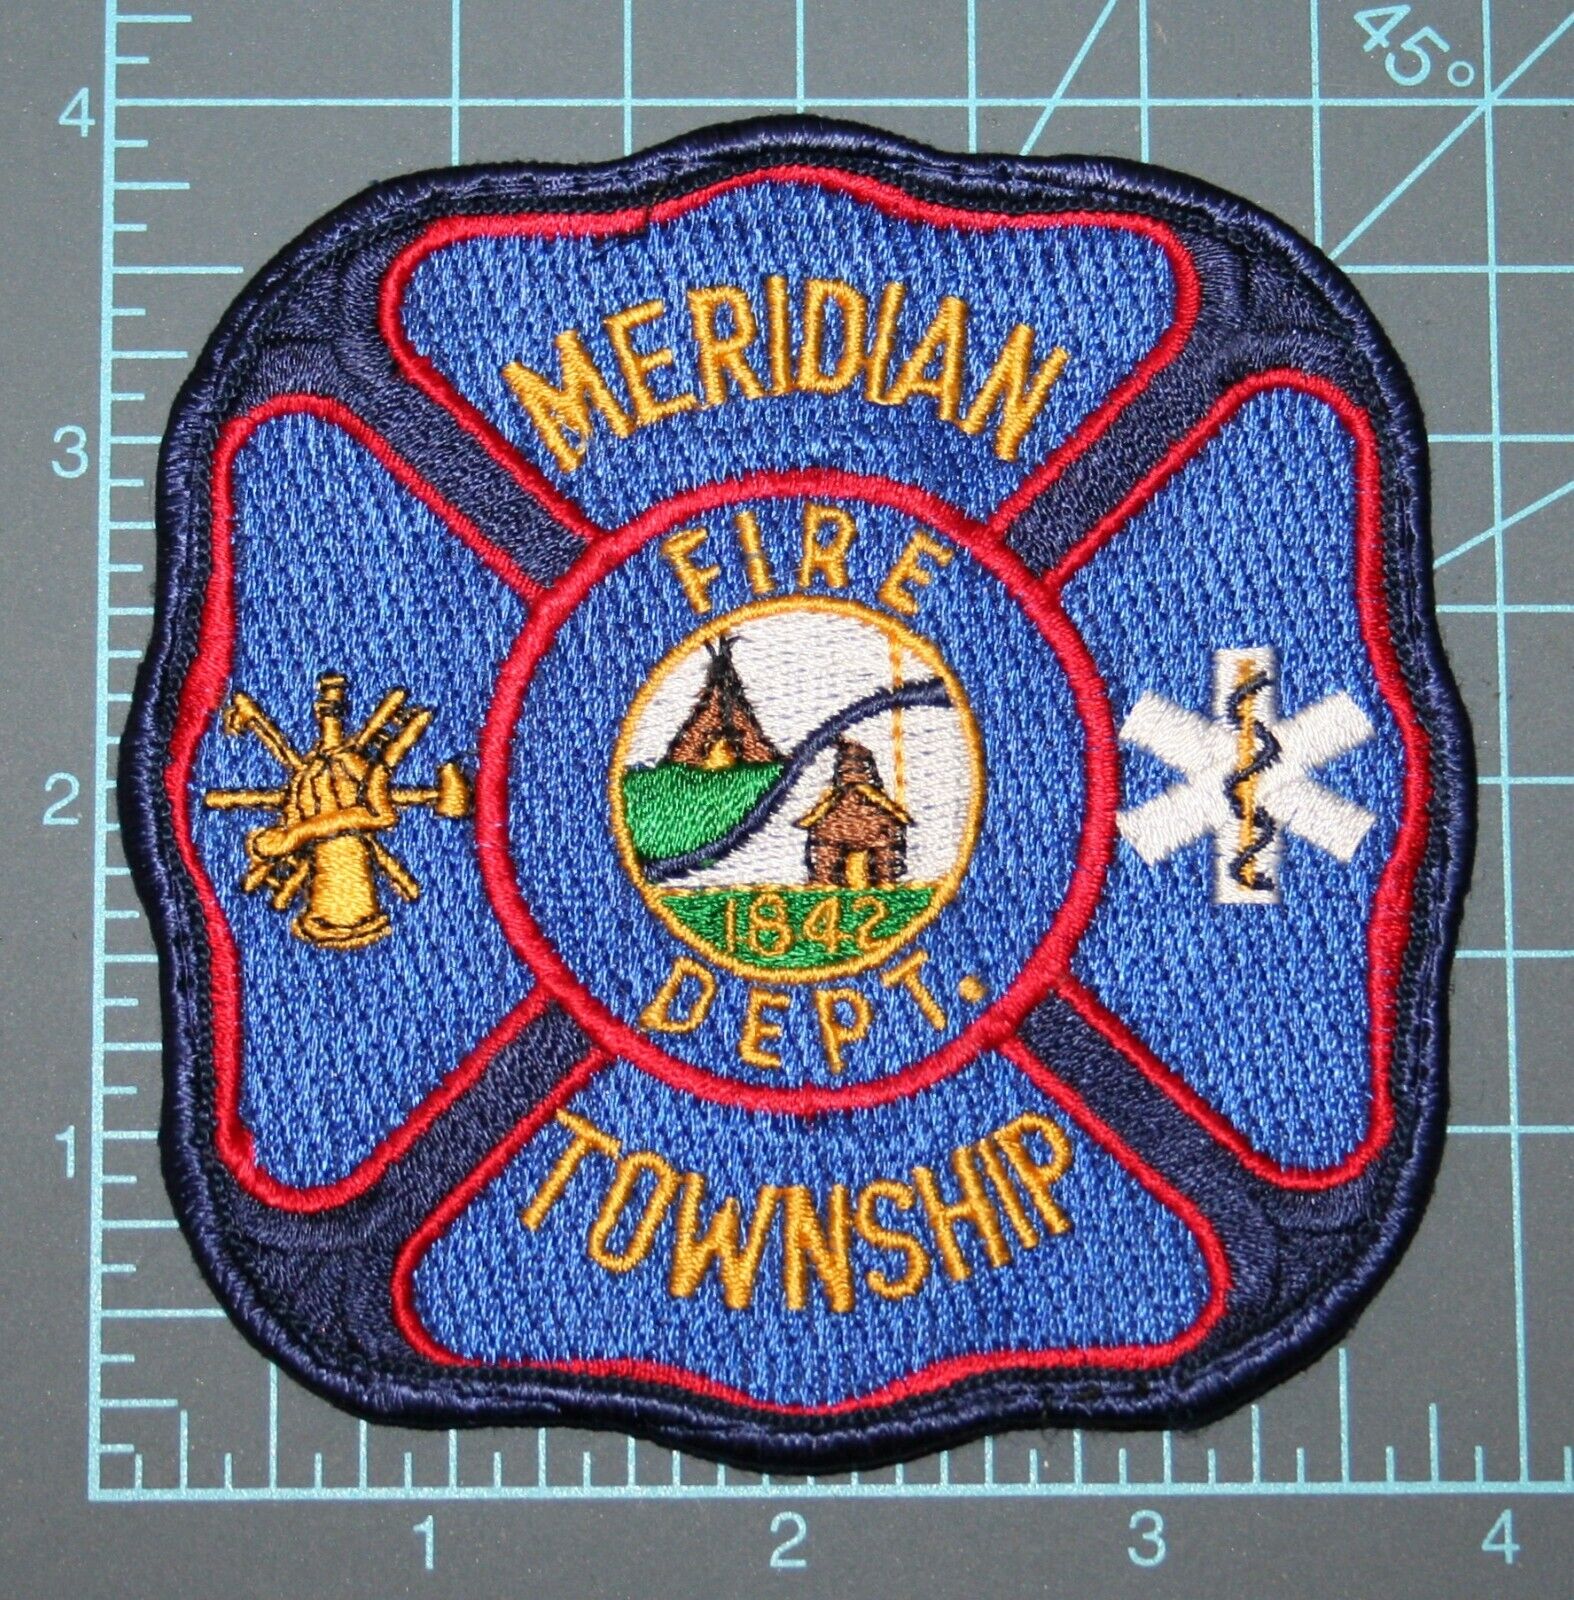 MERIDIAN TOWNSHIP Fire Department MICHIGAN Ingham County Uniform Patch